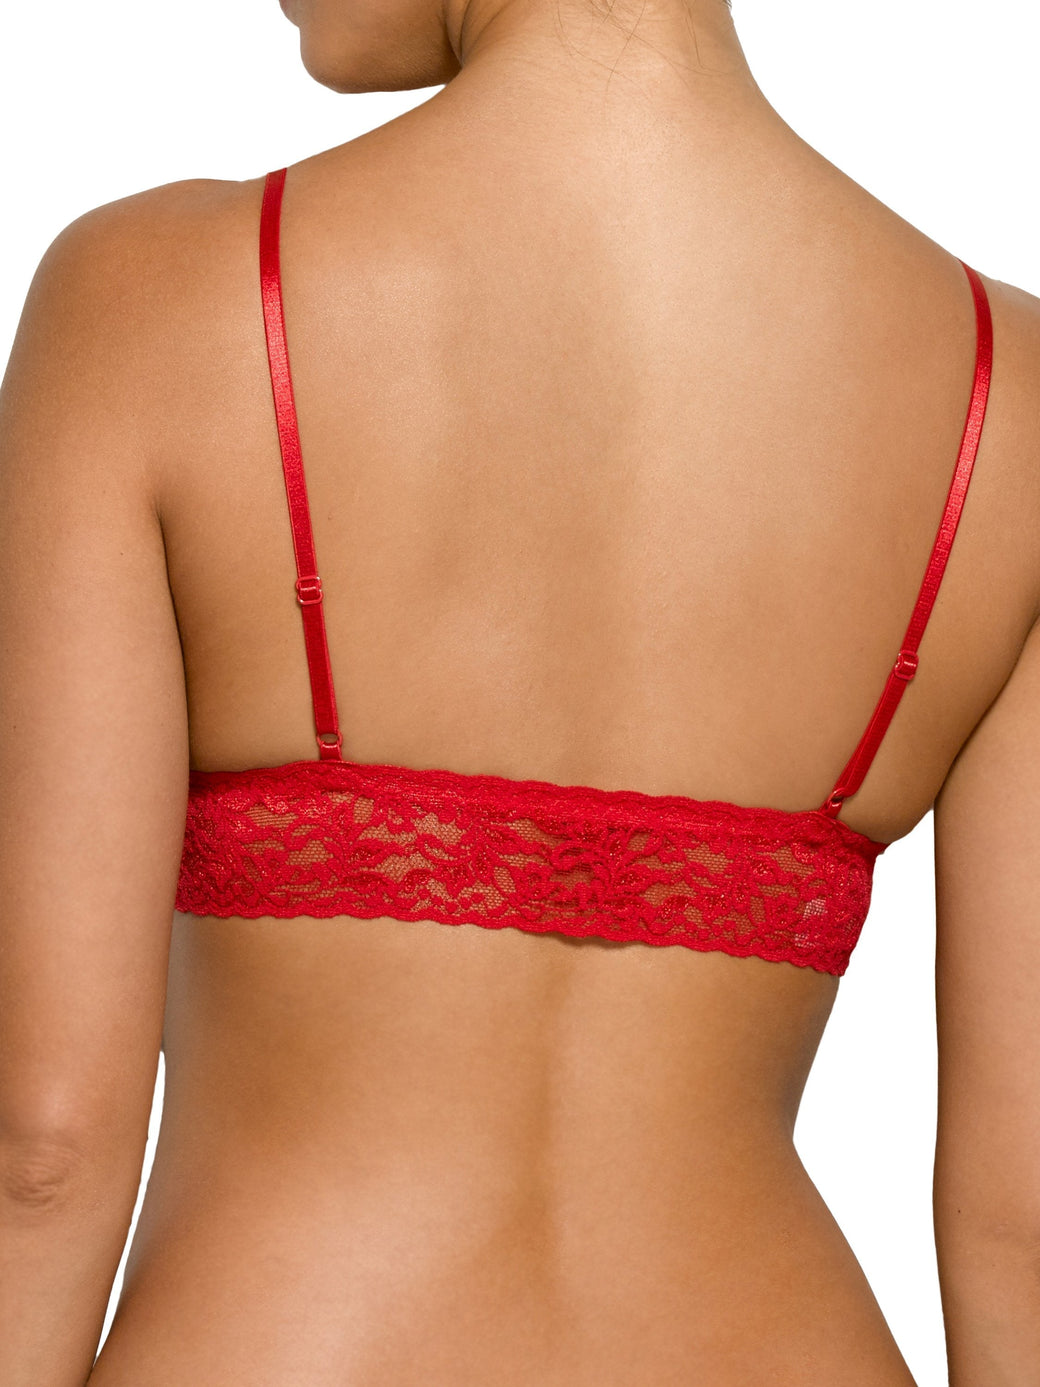 Dark red lace triangle bra top, Bras, Women'secret